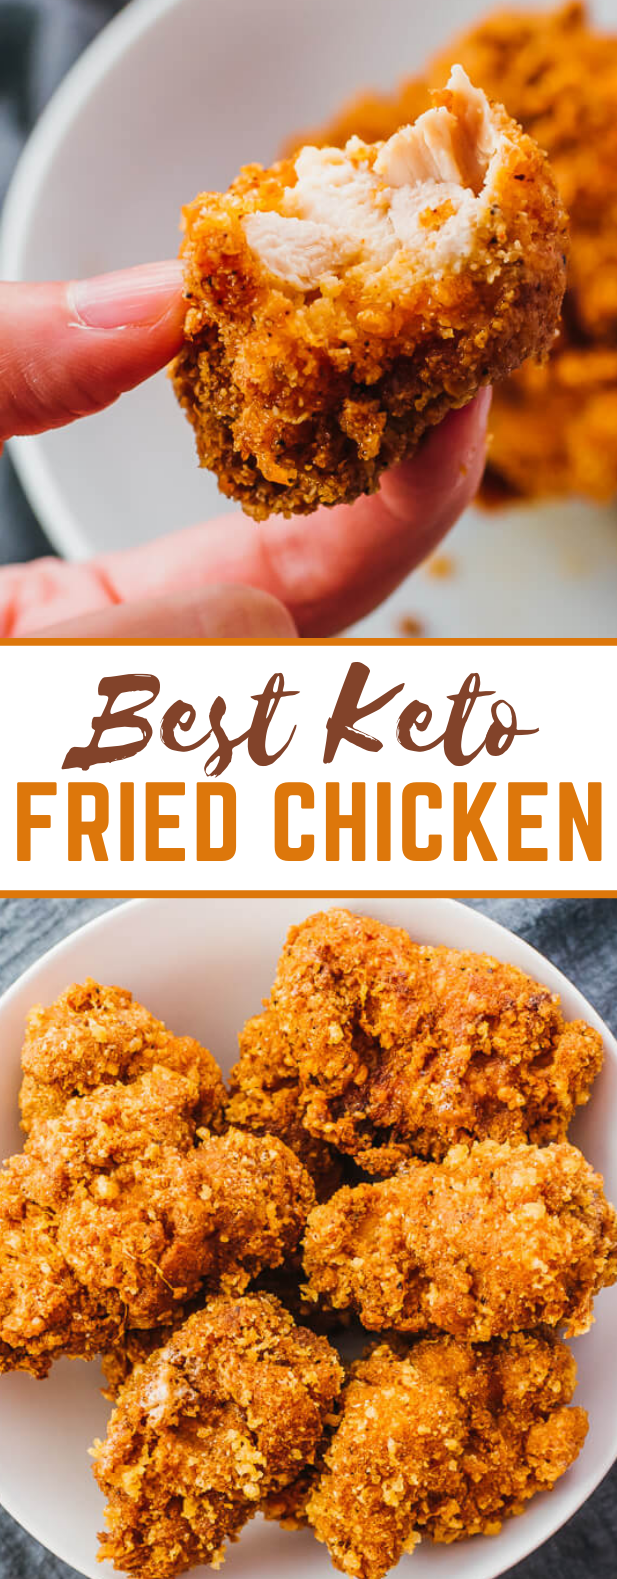 BEST KETO FRIED CHICKEN #healthy #diet #ketogenic #friedchicken #lowcarb